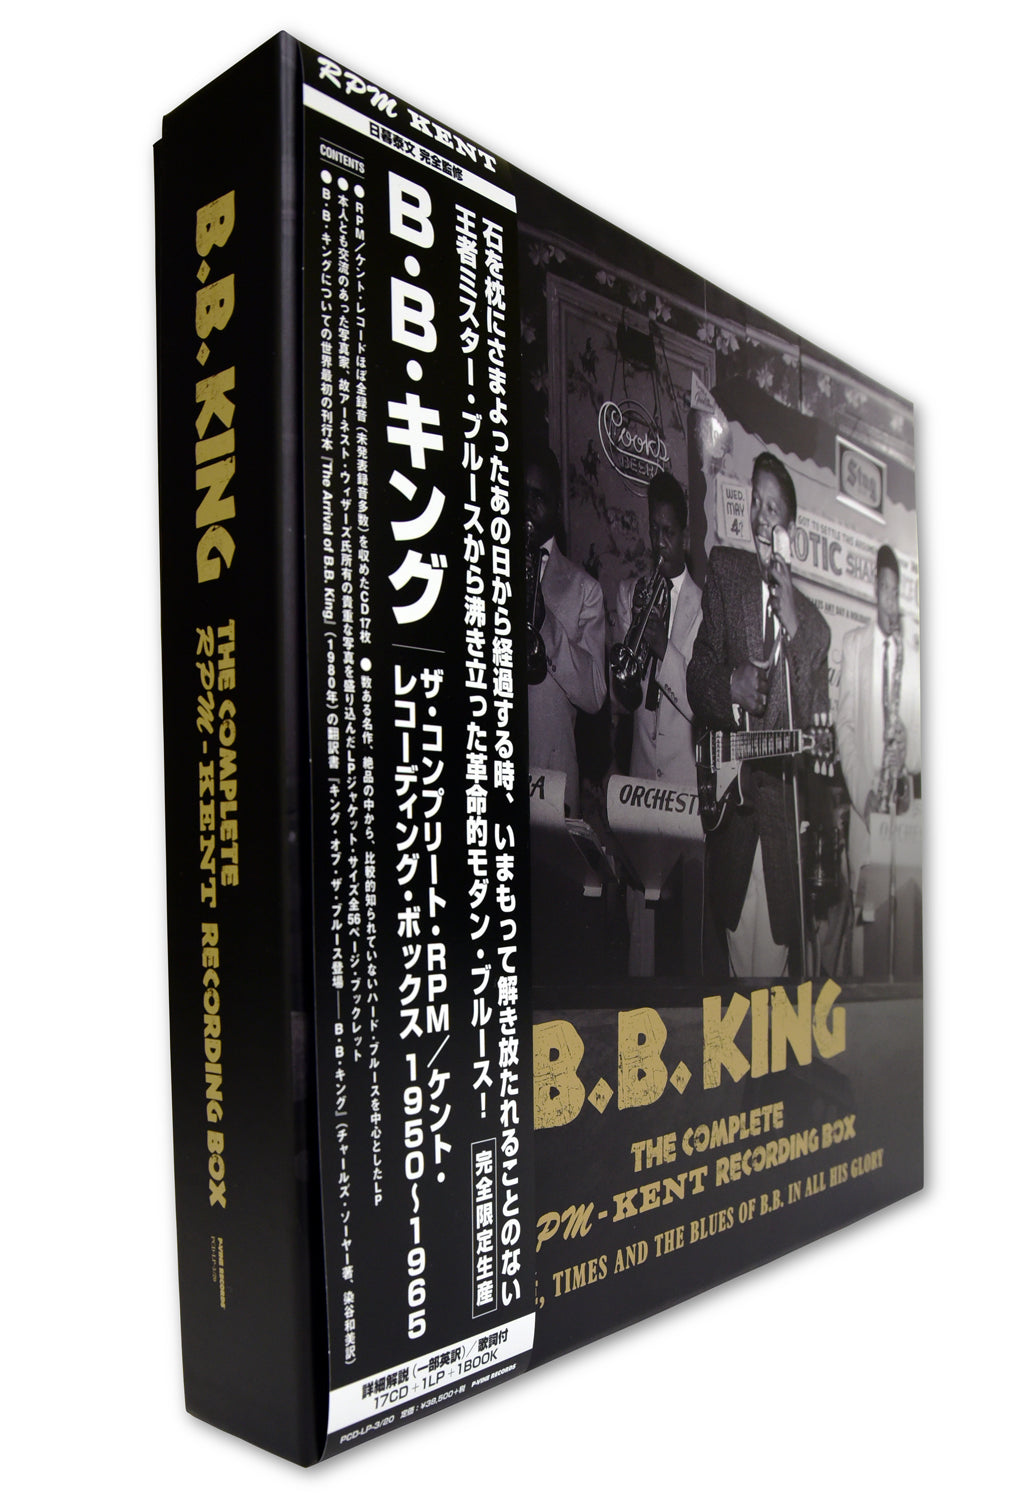 B.B. KING BOX